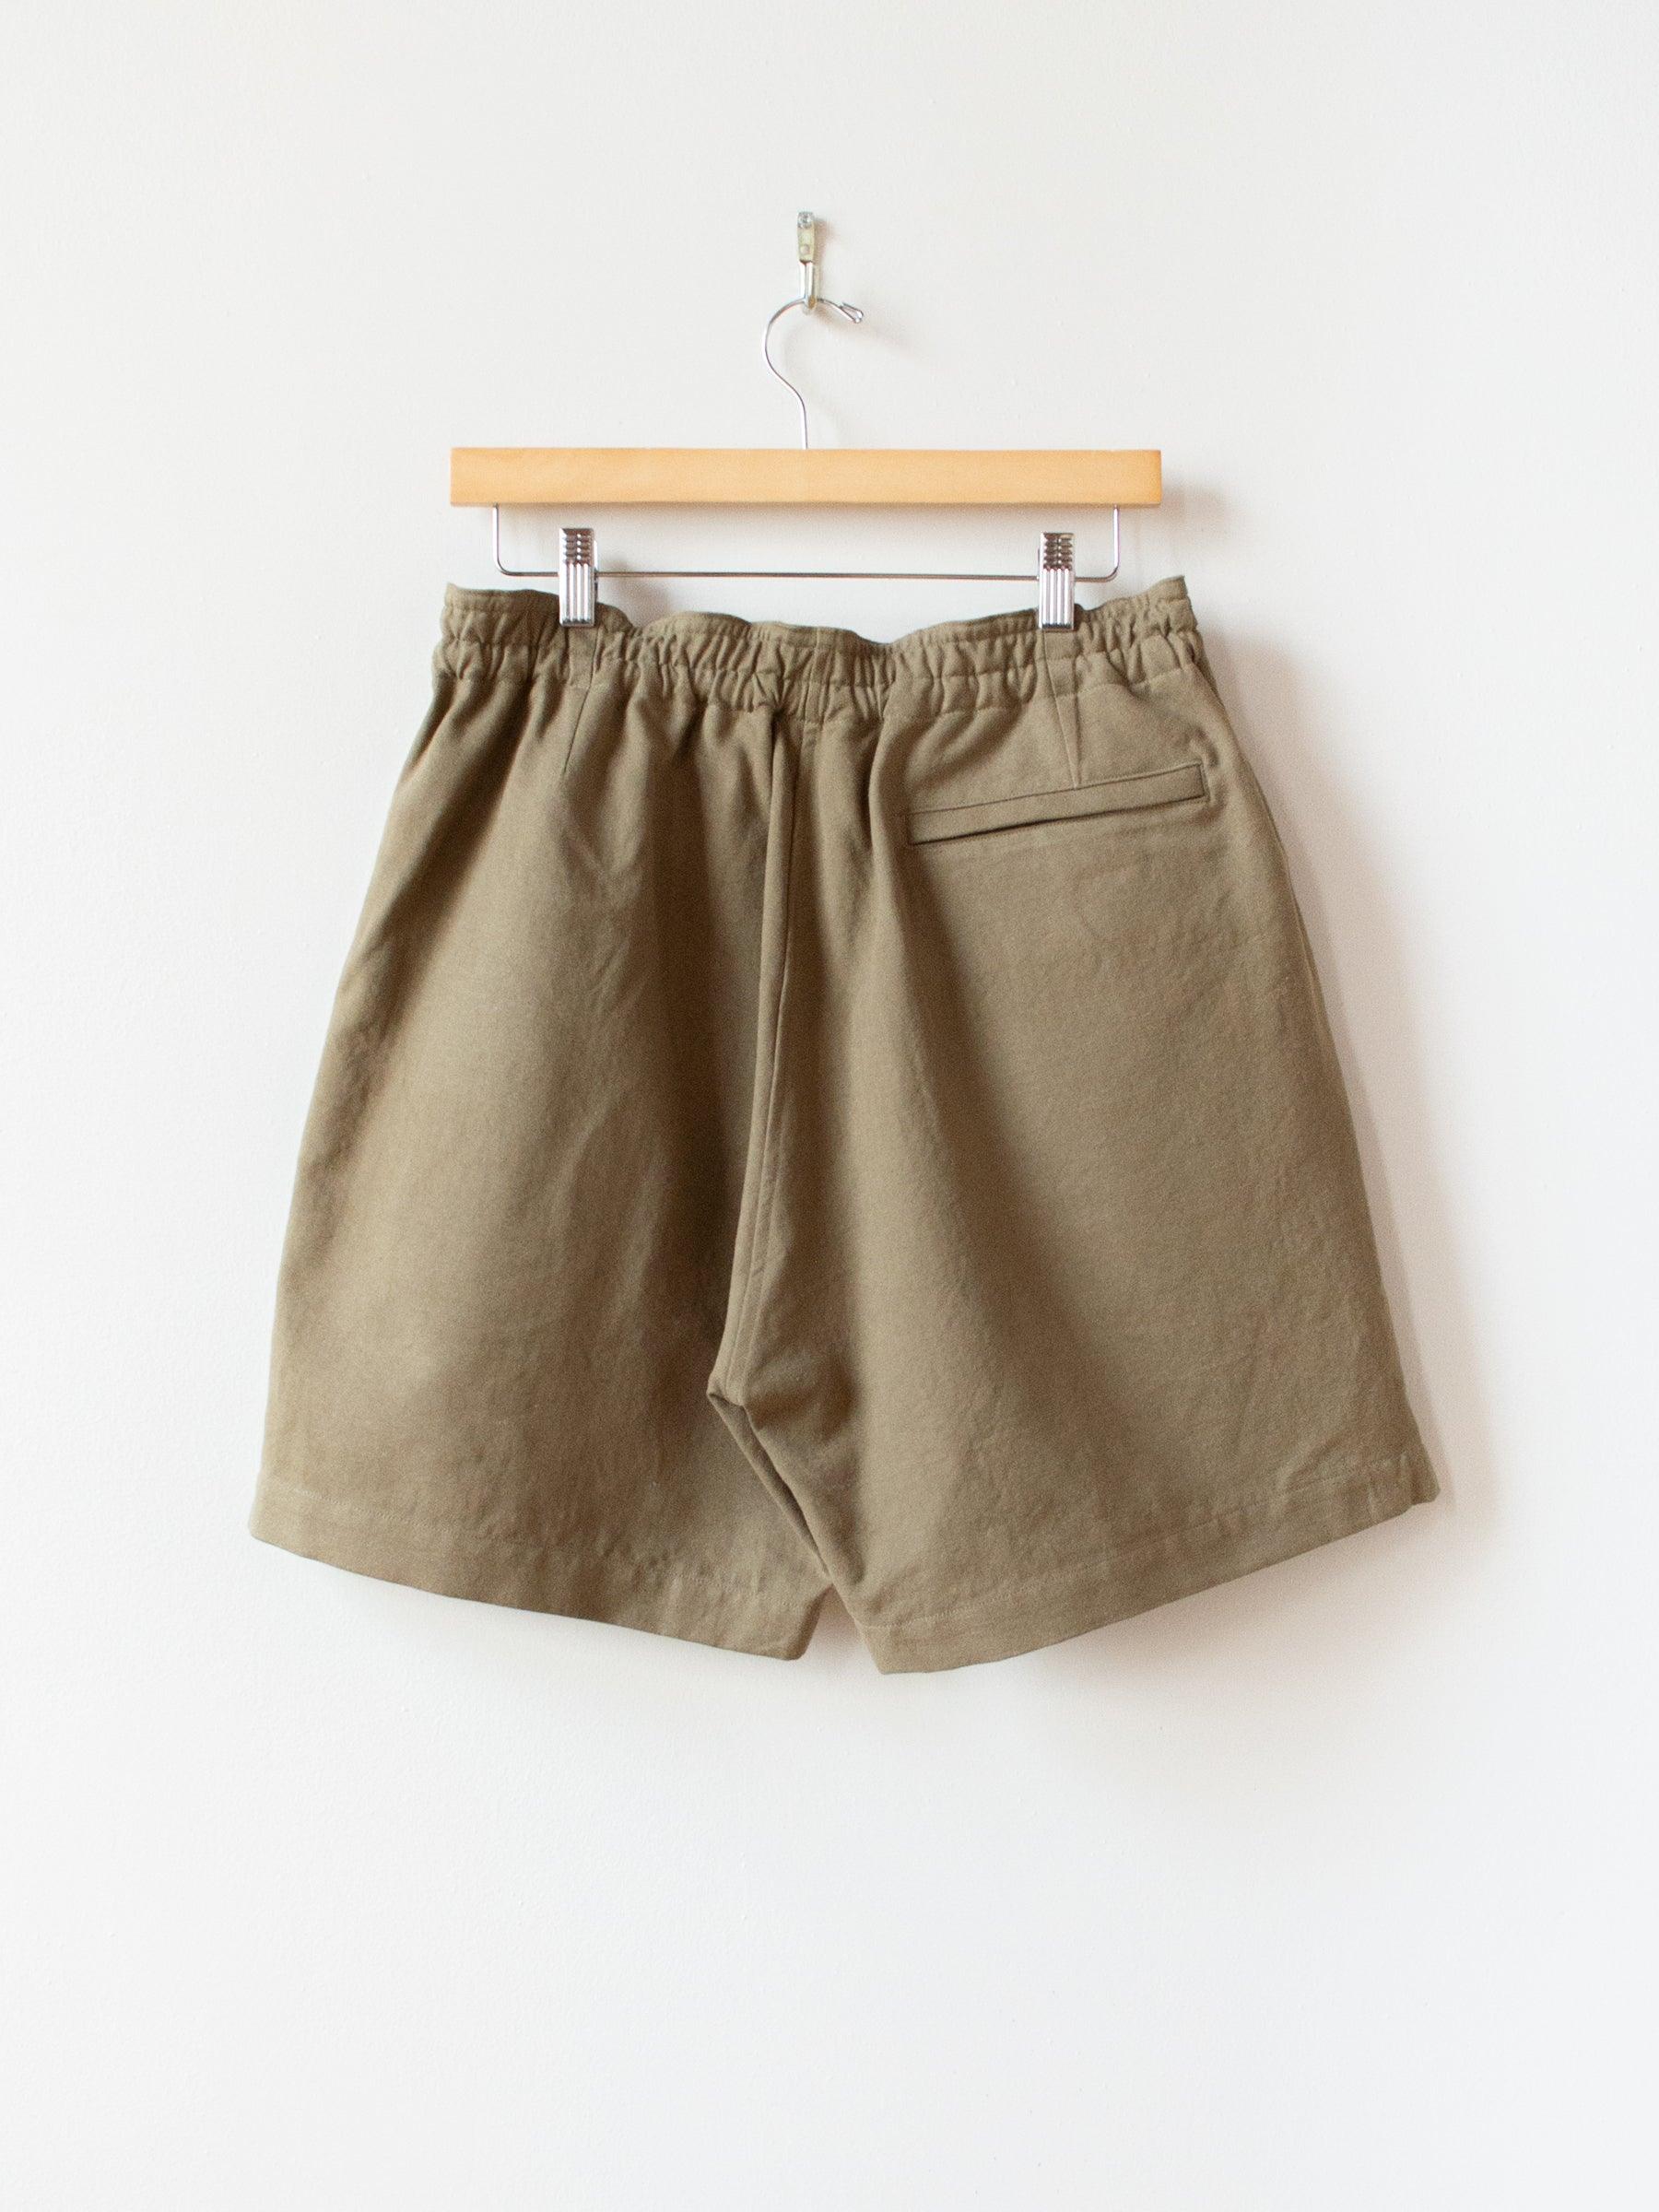 Namu Shop - Kaptain Sunshine Washed Co Linen Silk Herringbone Training Shorts - Army Green